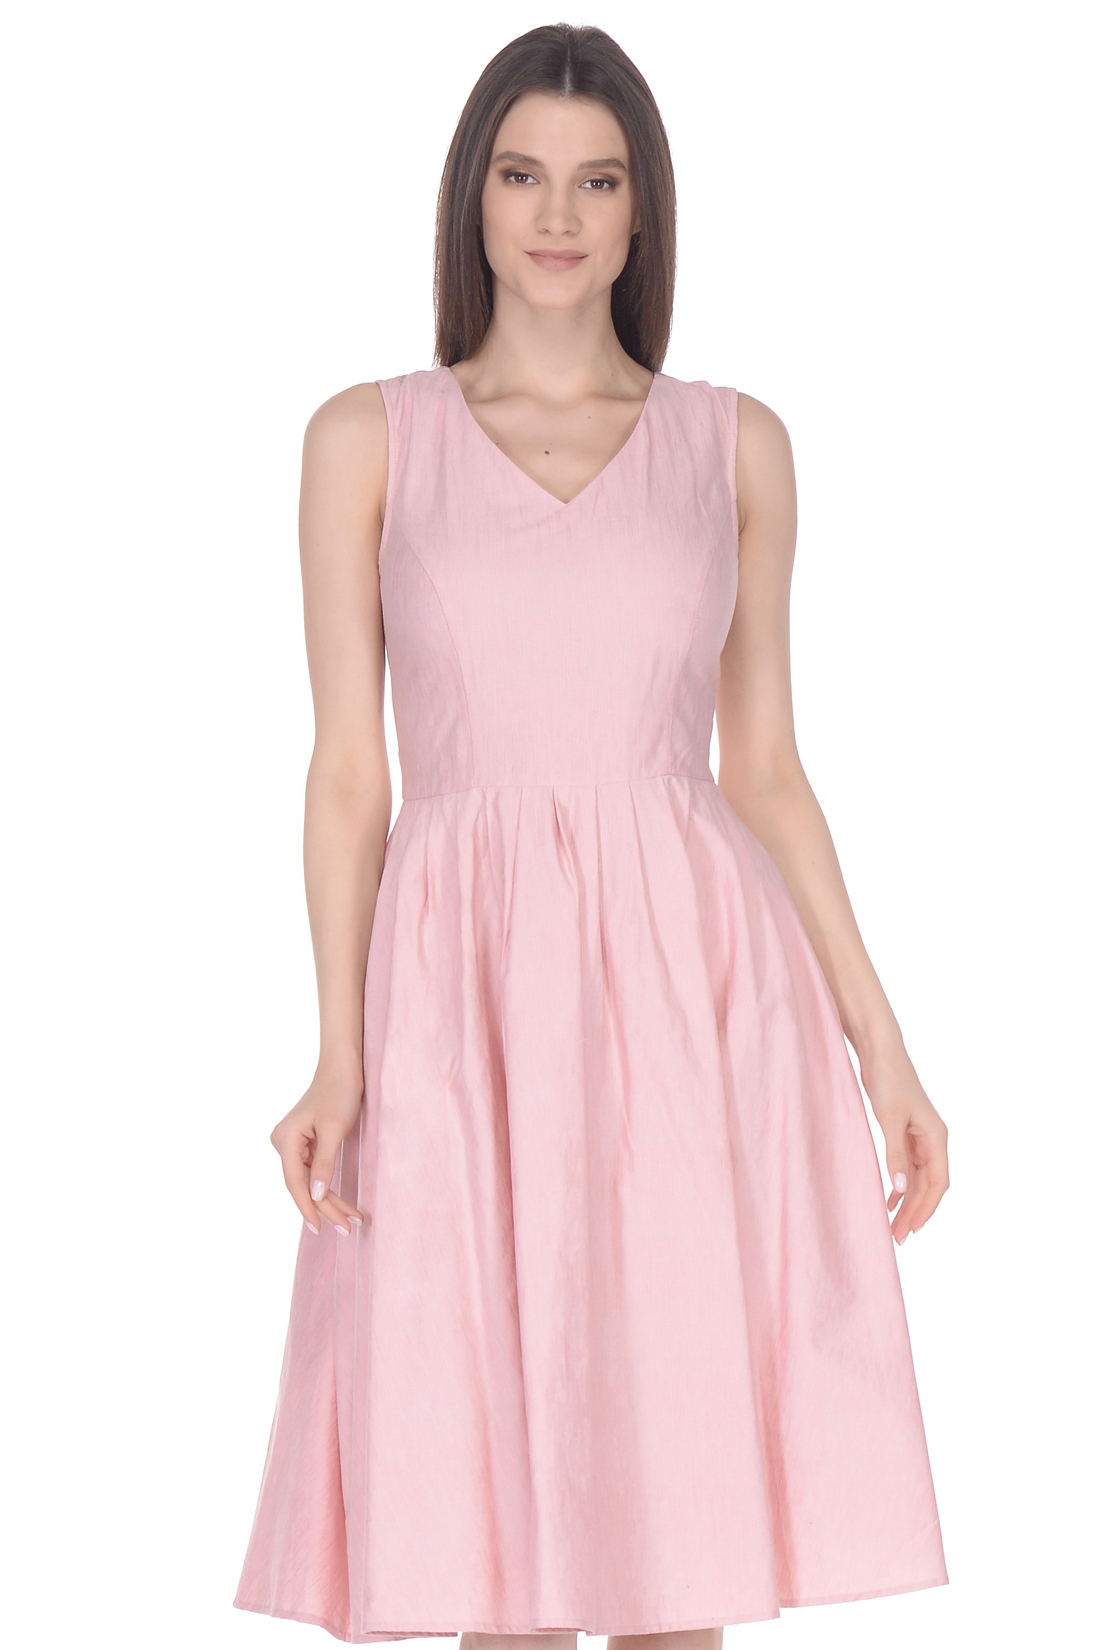 Платье силуэта new look (арт. baon B458043), размер S, цвет розовый Платье силуэта new look (арт. baon B458043) - фото 3